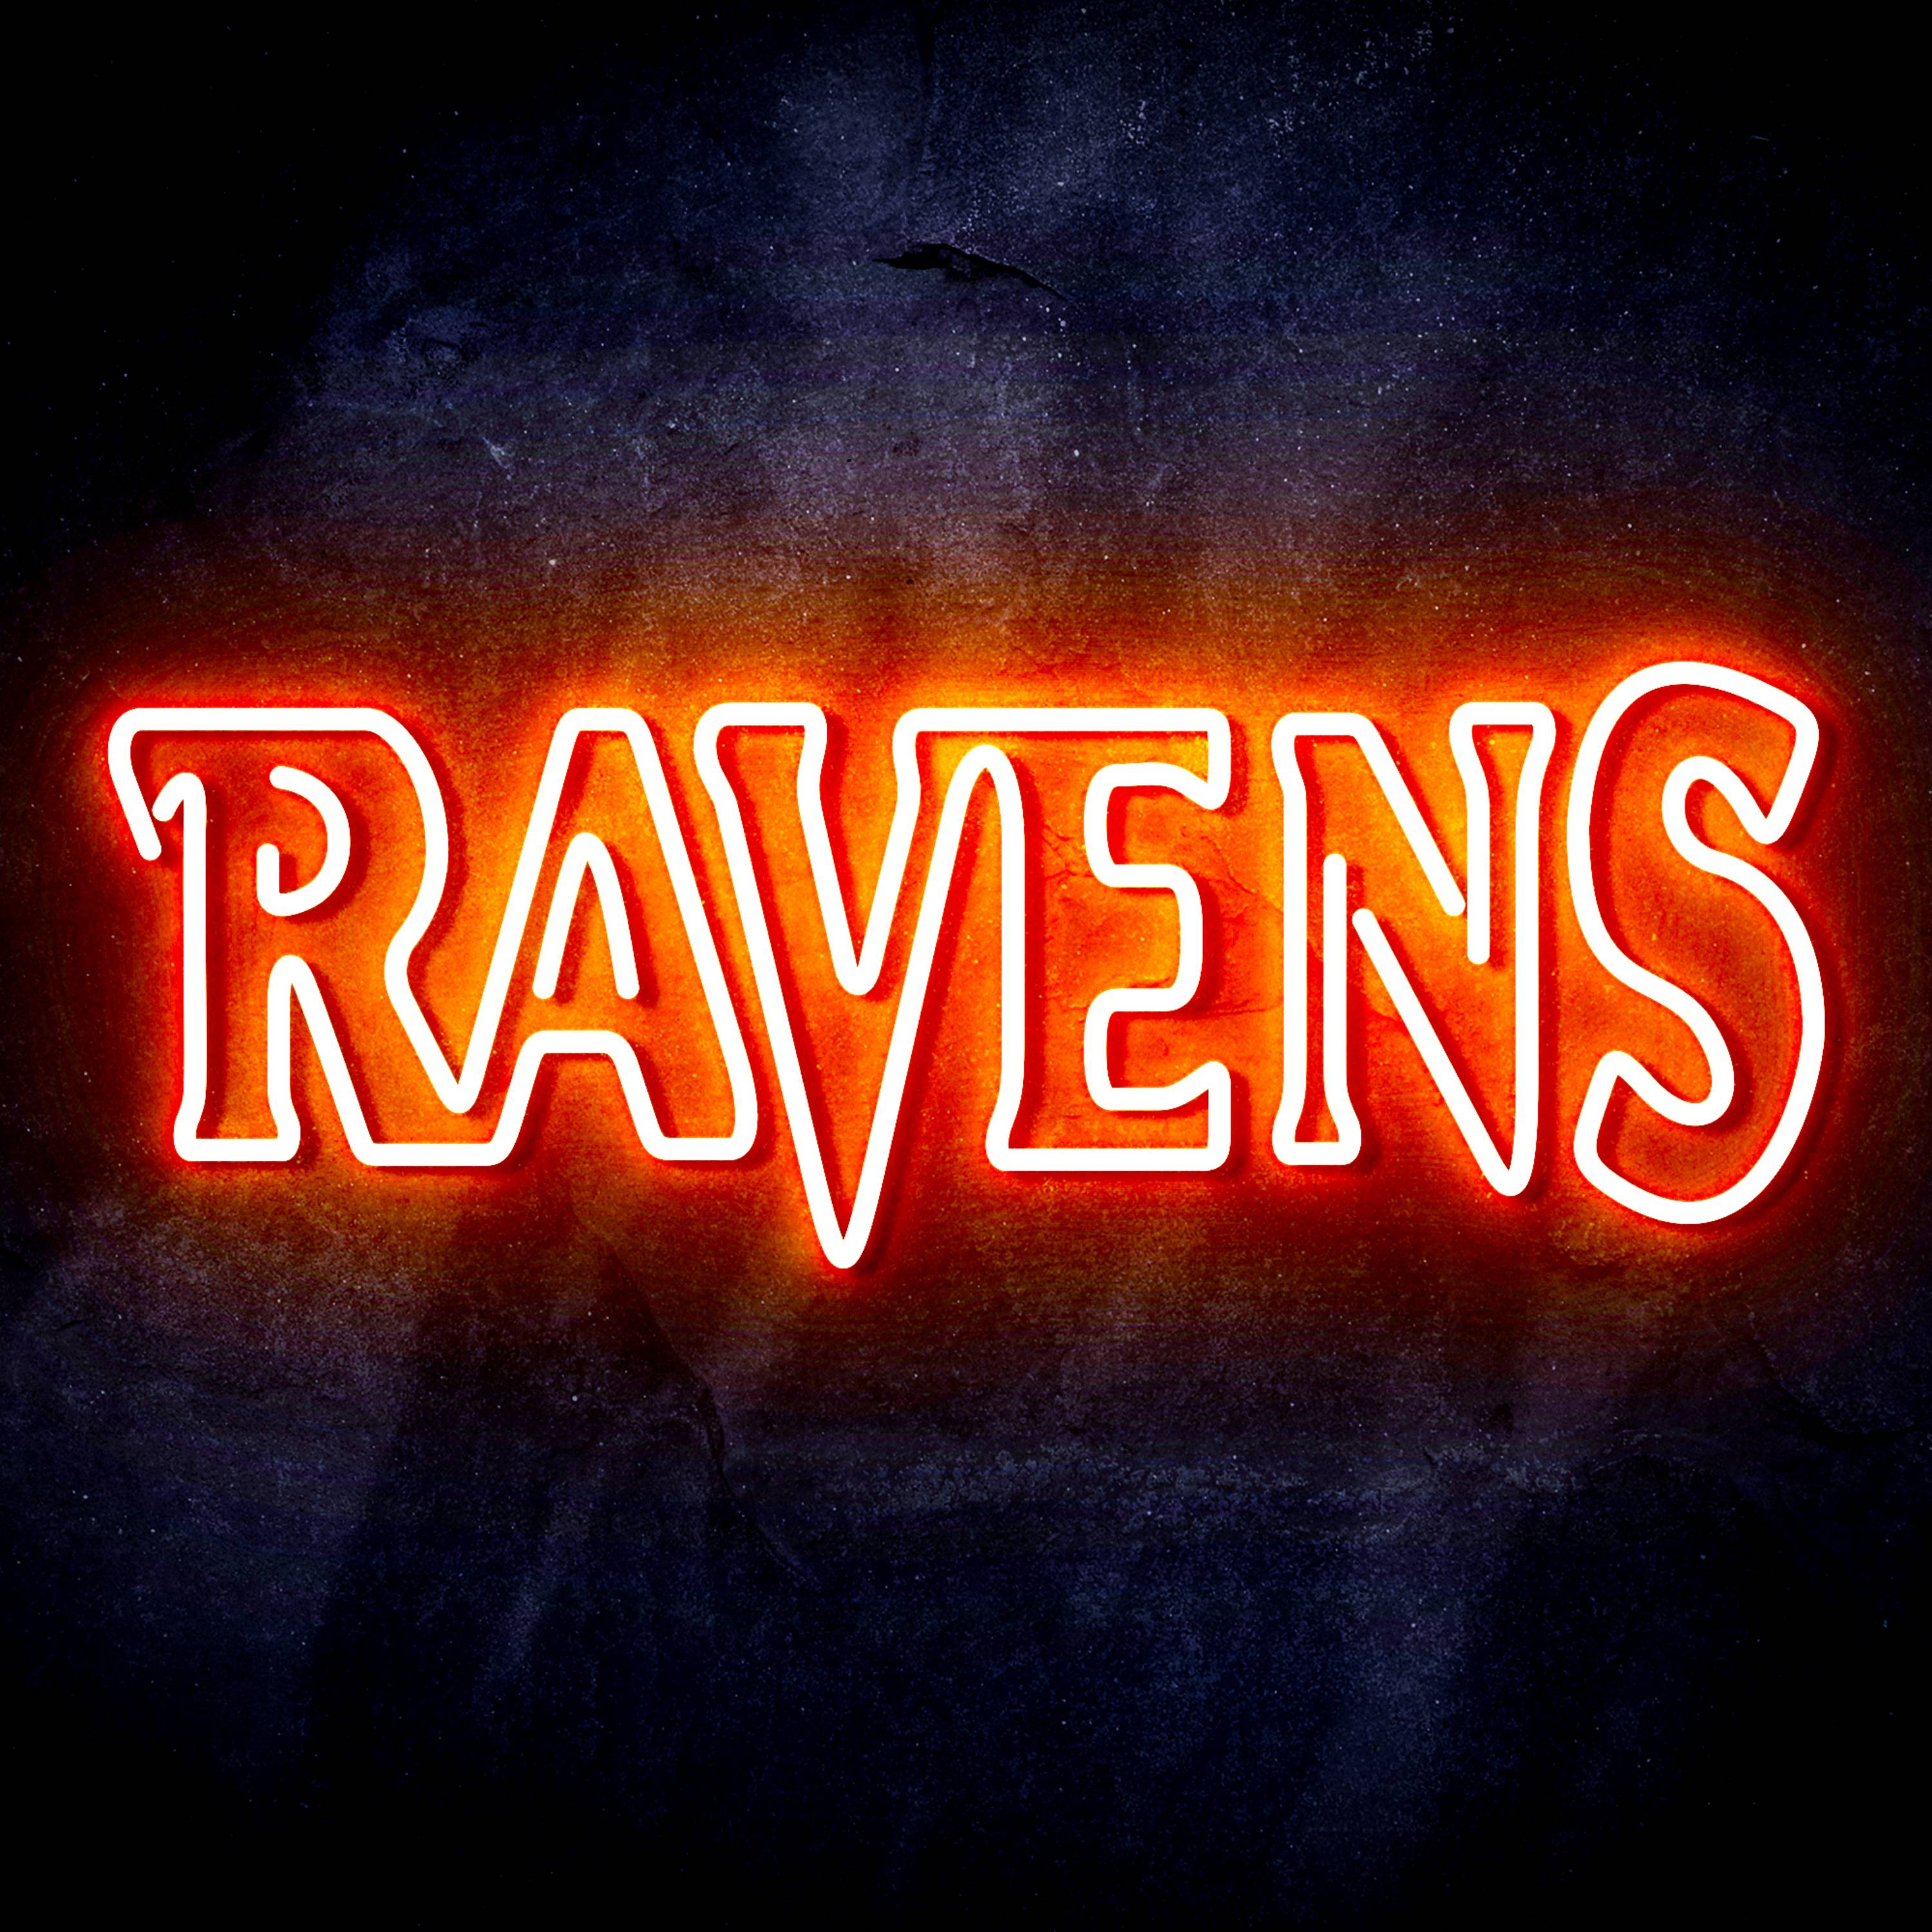 NFL RAVENS LED Neon Sign